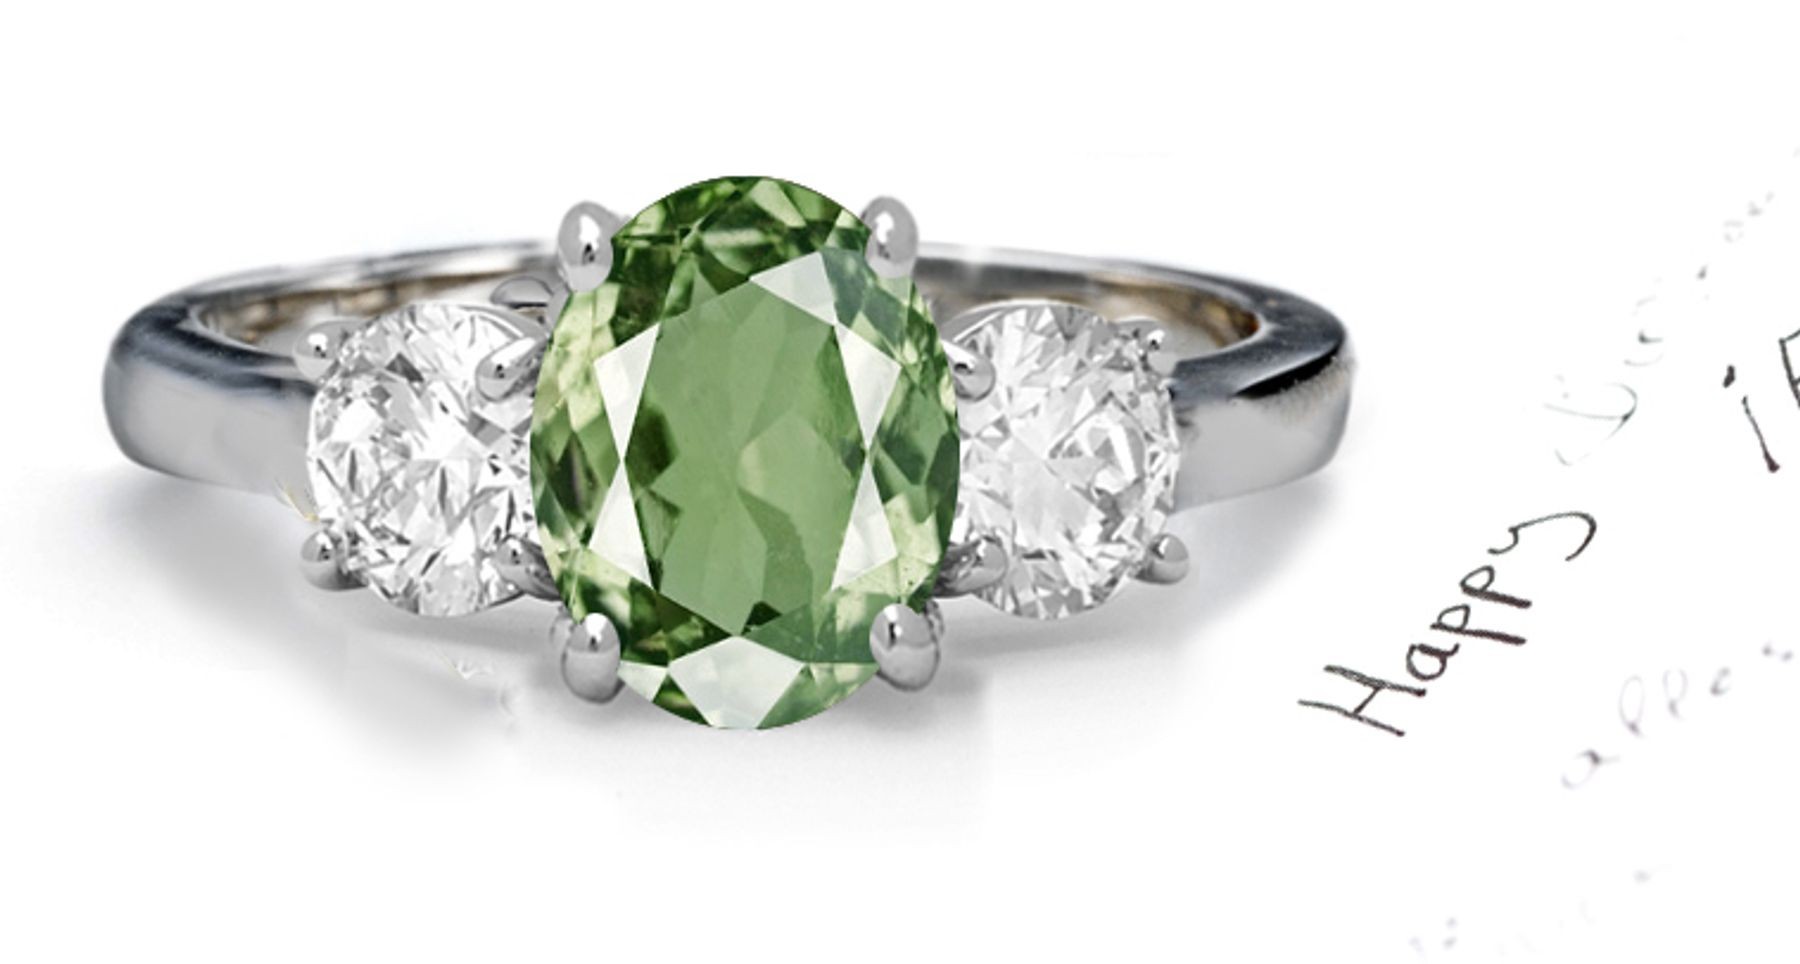 2013 Catalog No. 5 - Product Details: Deep Green Sapphire & Diamond Ring